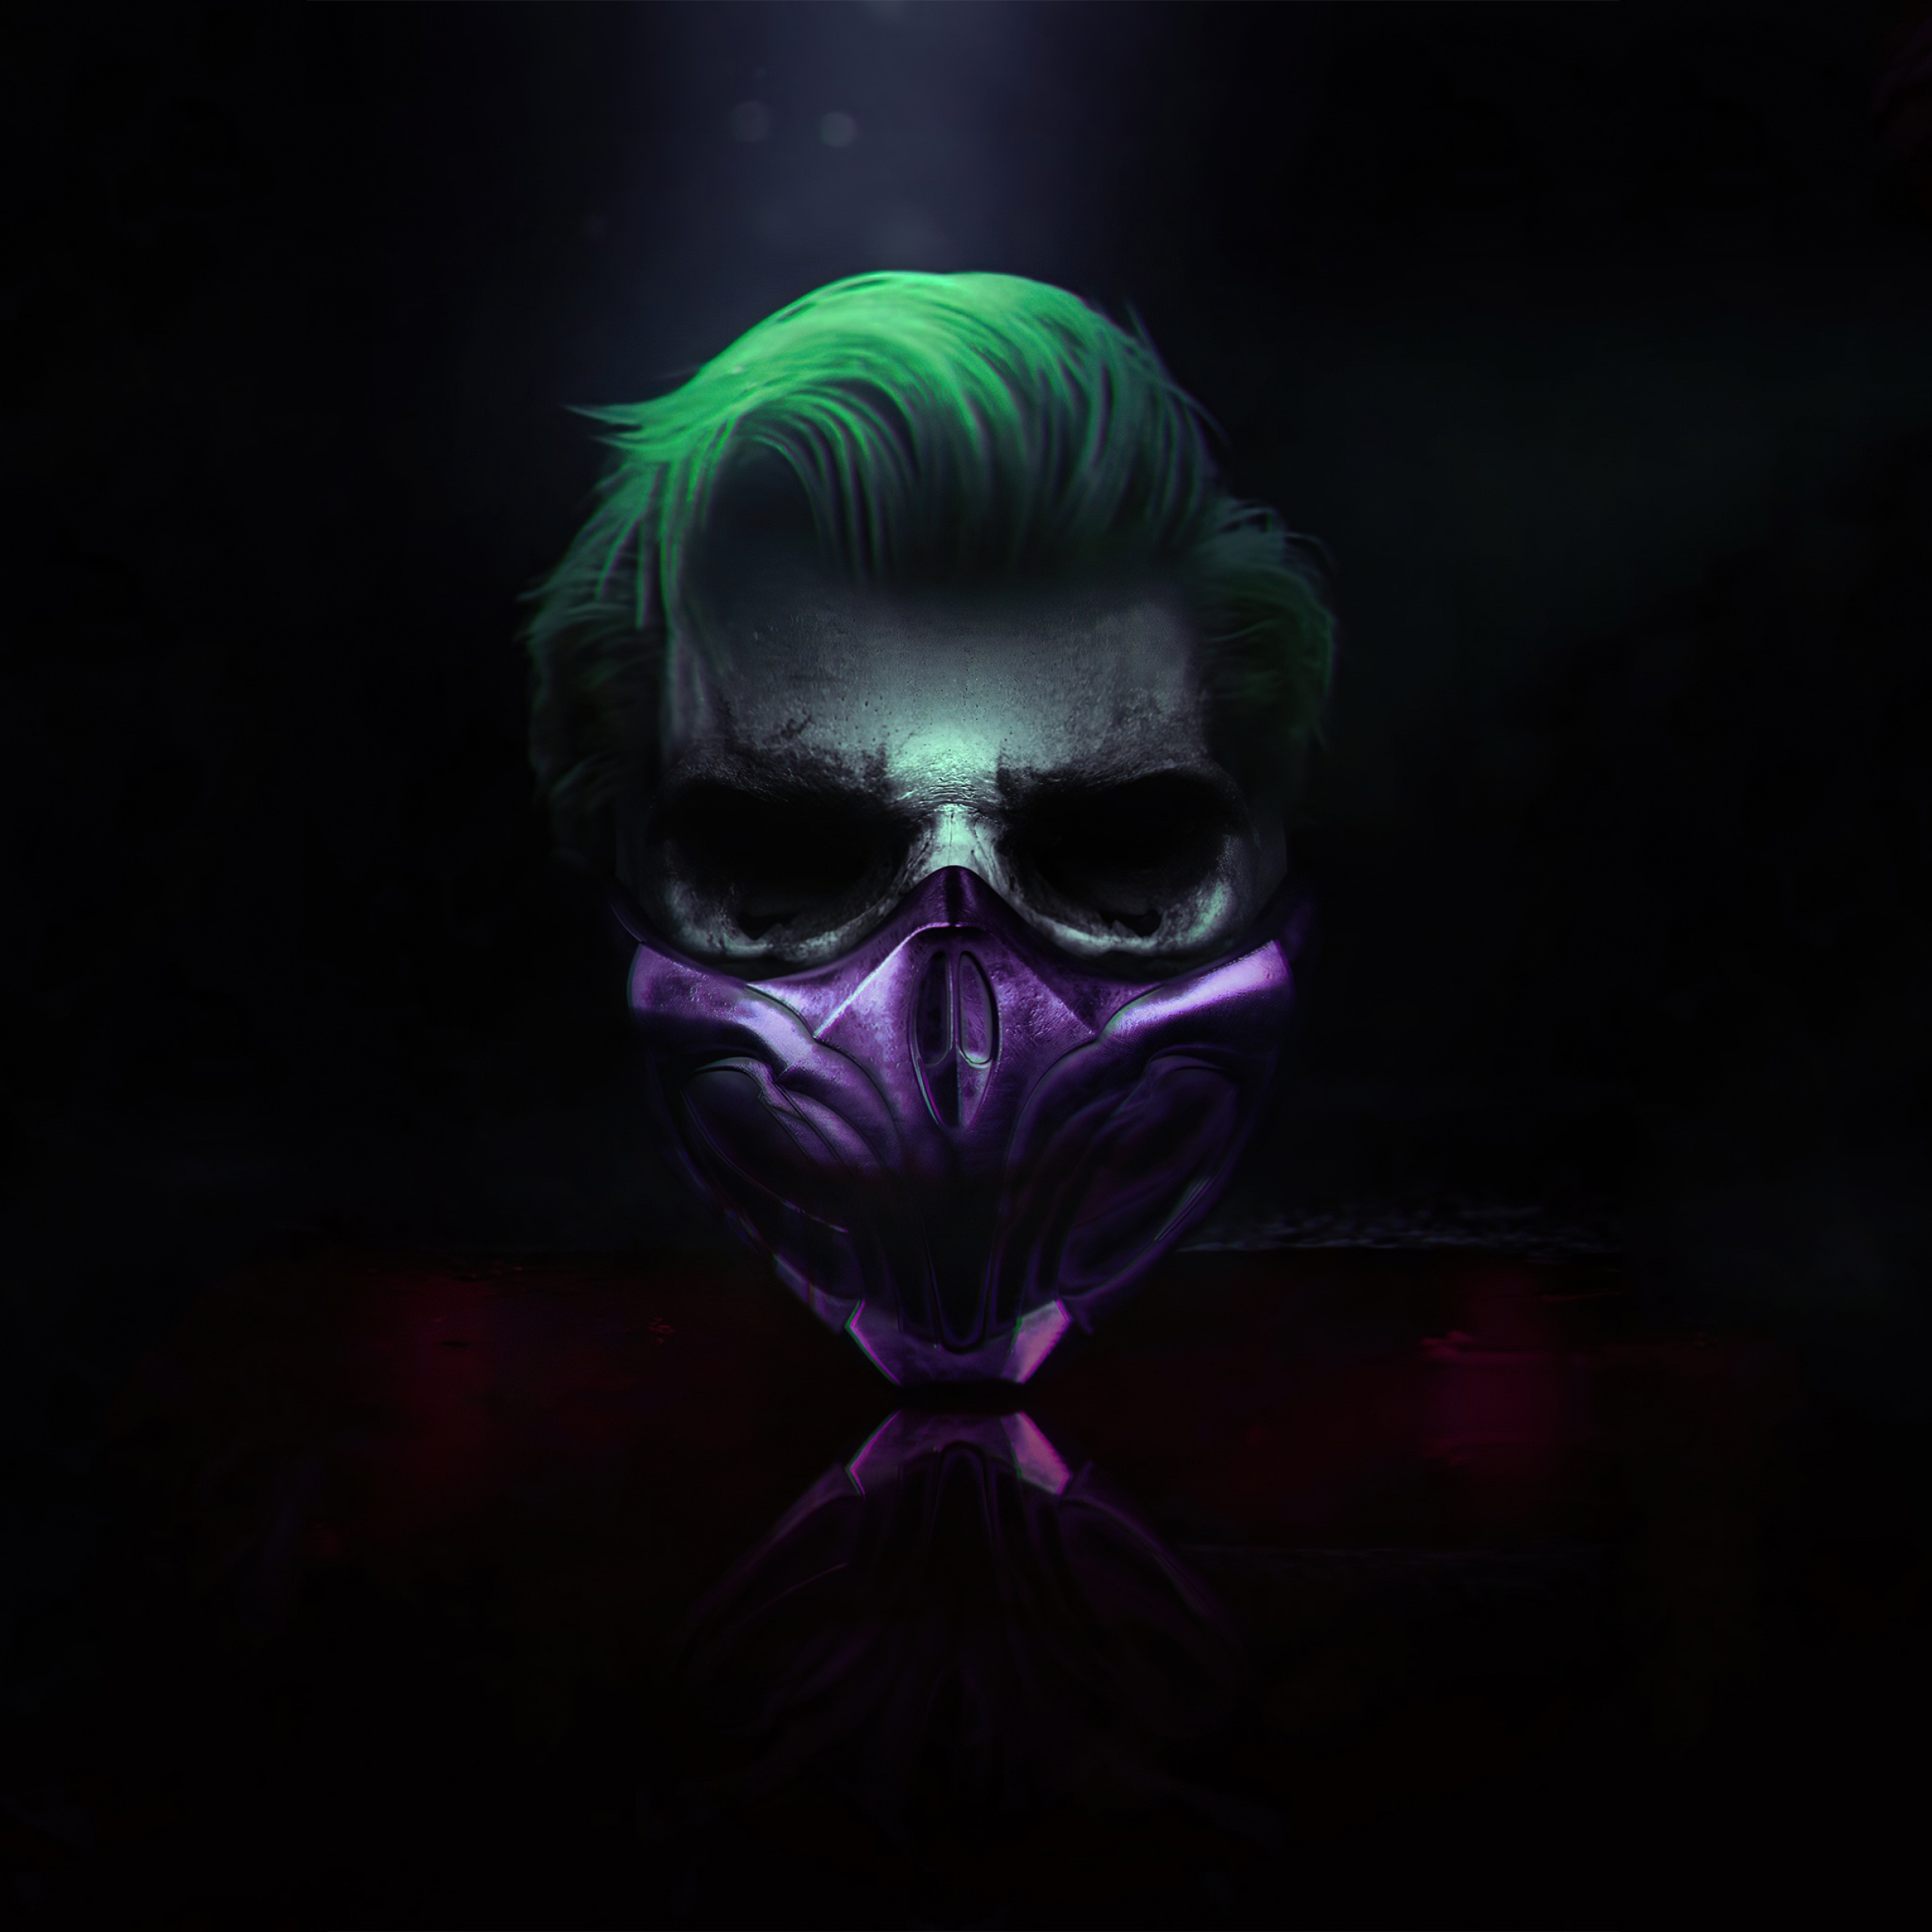 Joker 2019 Clown Mask Smoking Movie Art 4K Wallpaper 7135